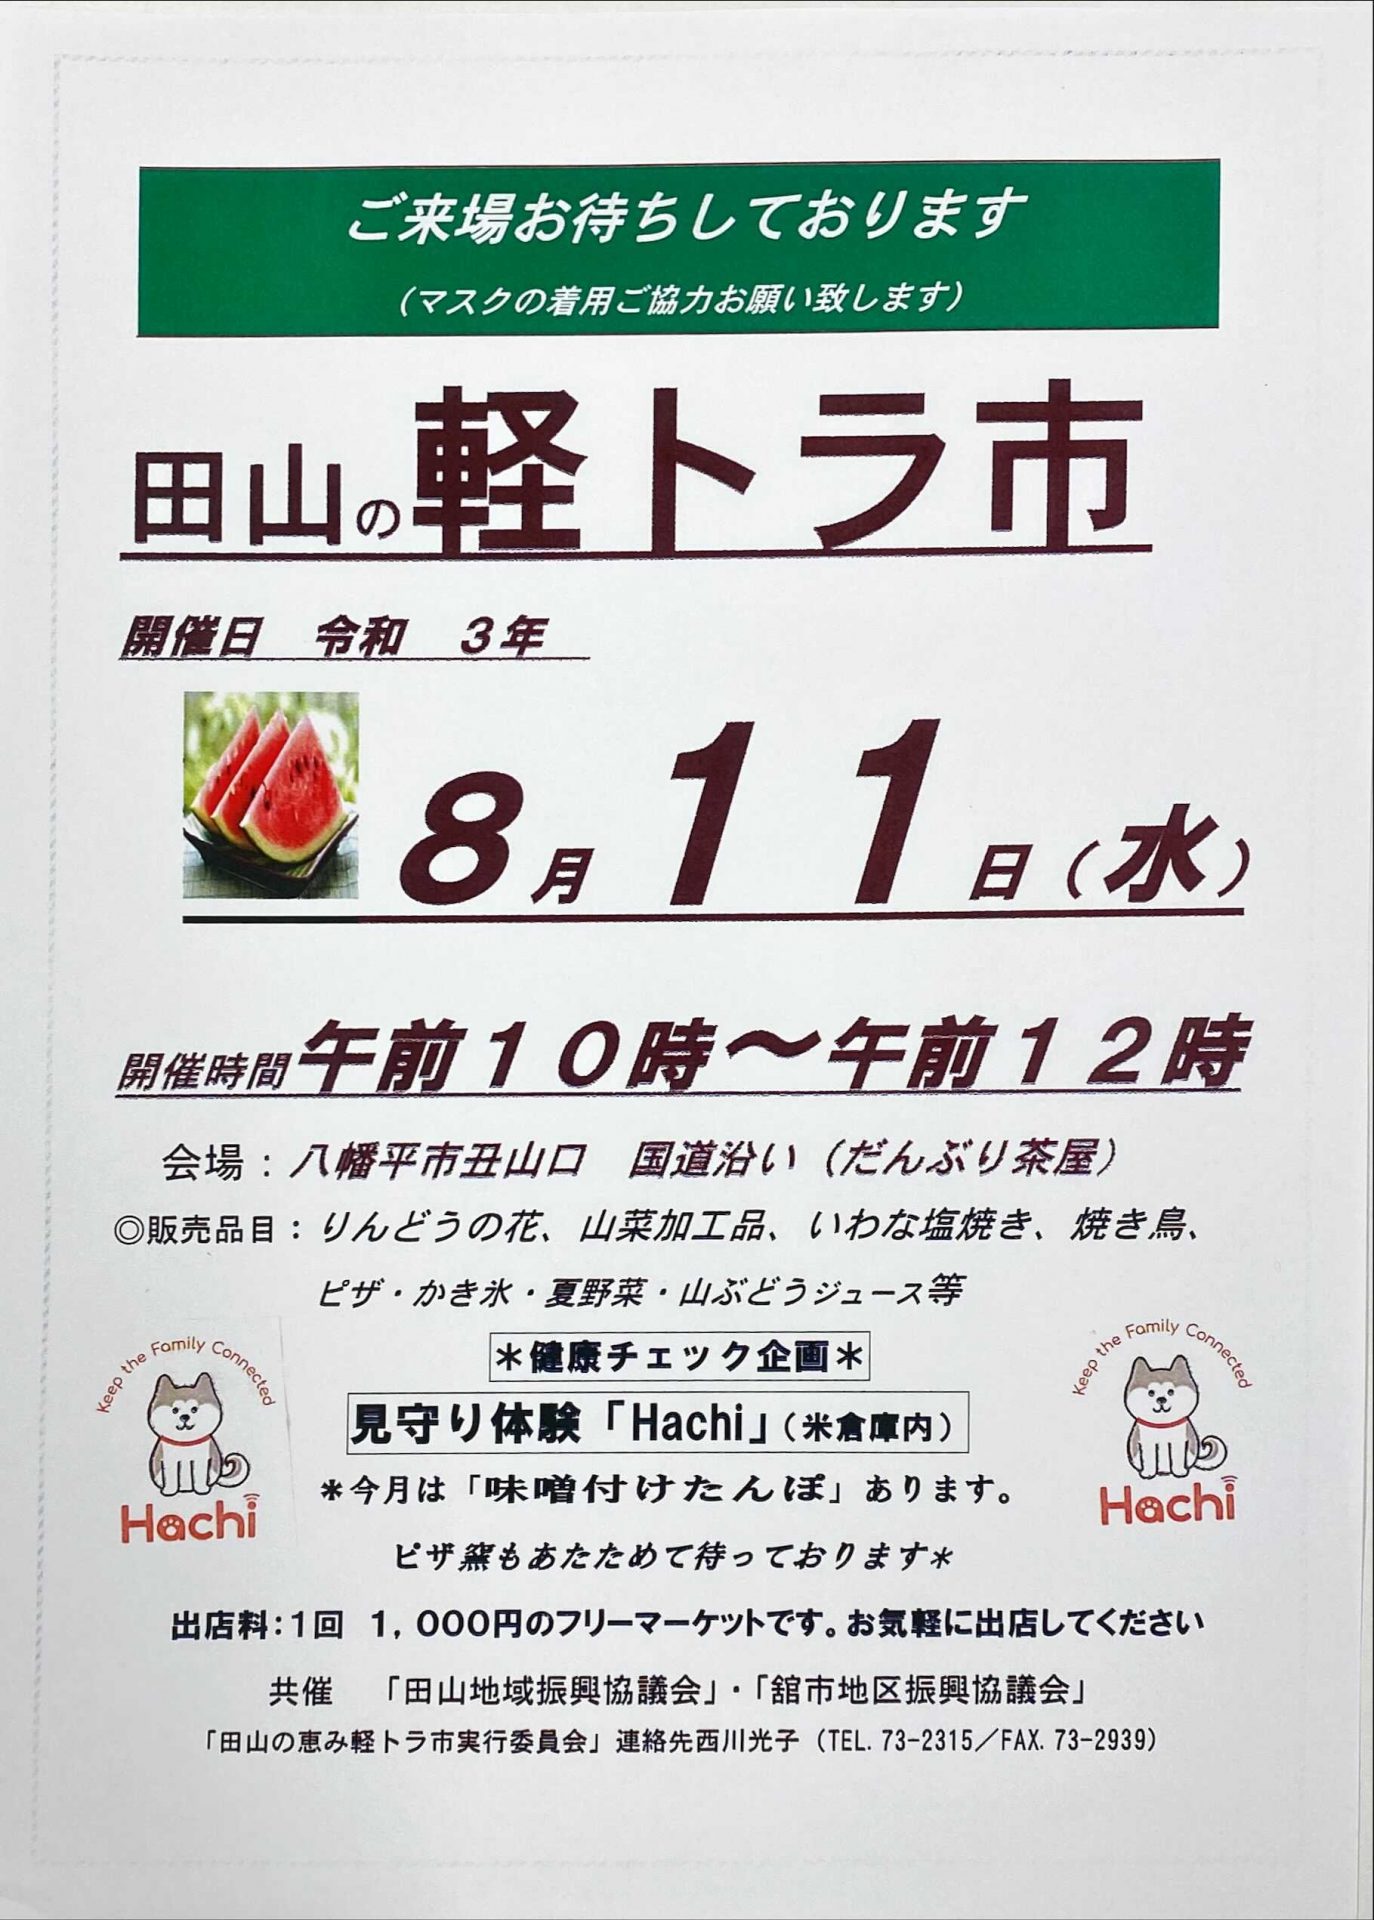 【8MV】8/11(水) 田山現地イベントへ出展します